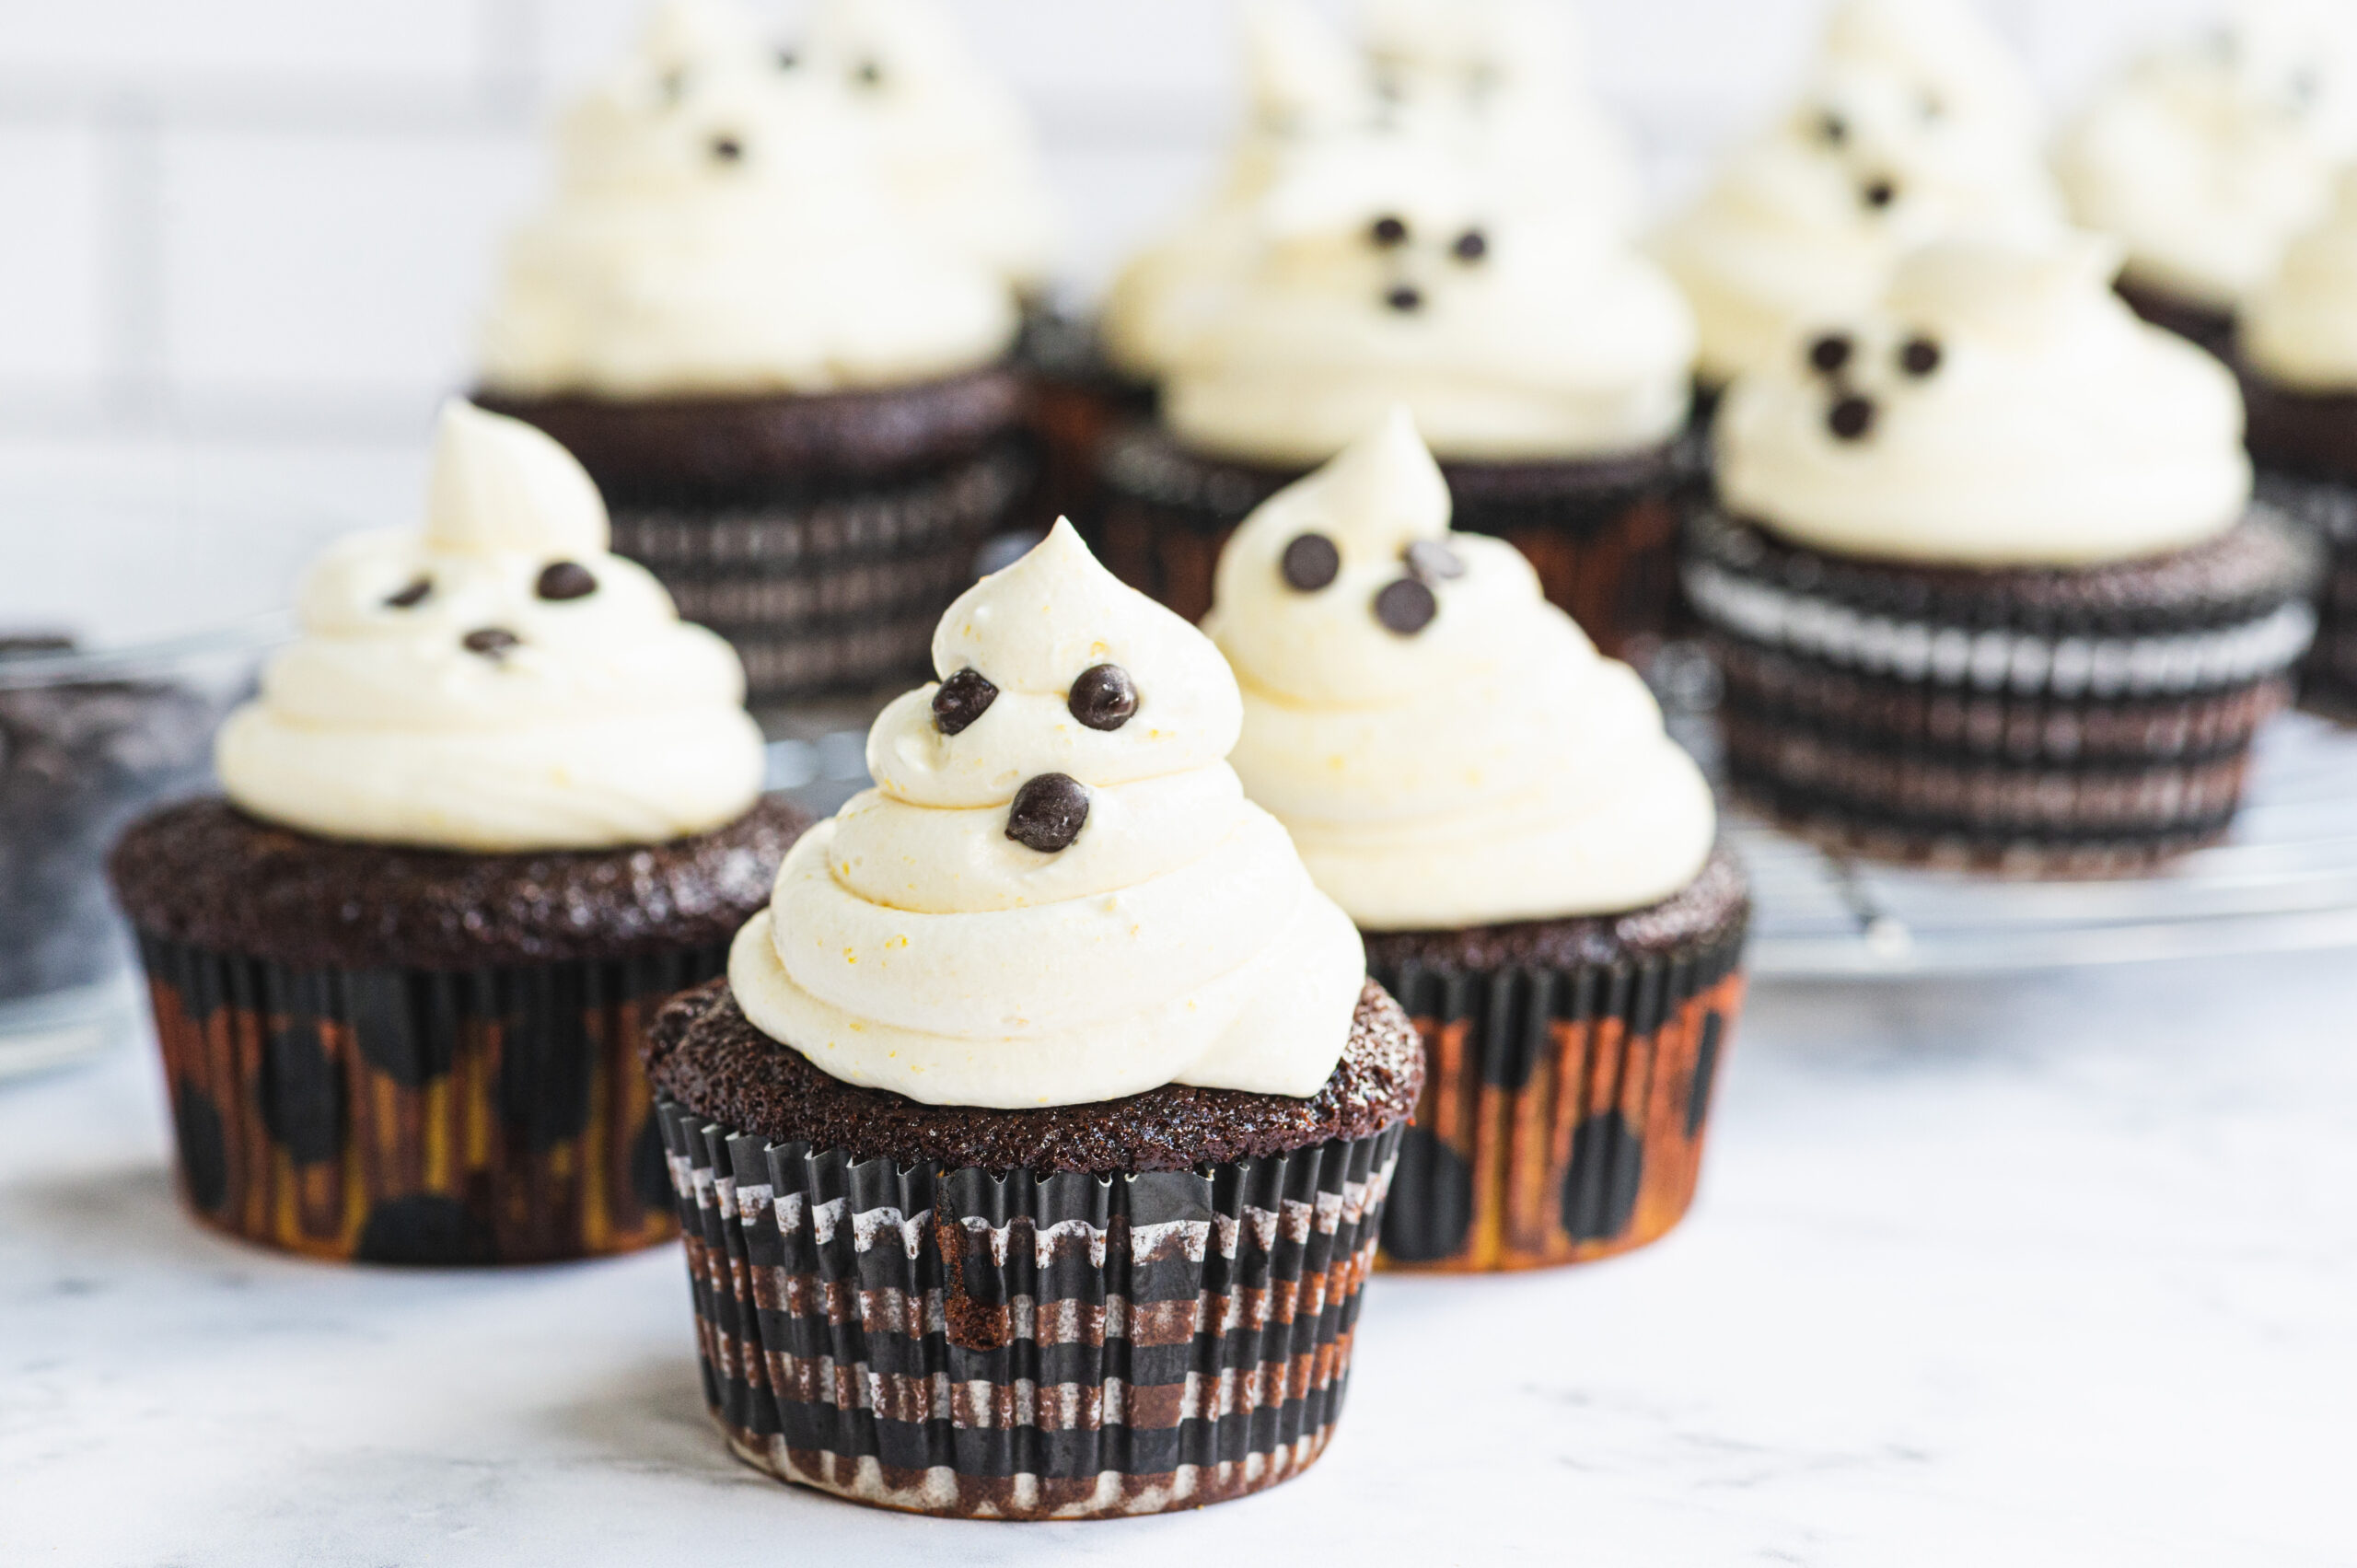 Easy Halloween Ghost Cupcakes